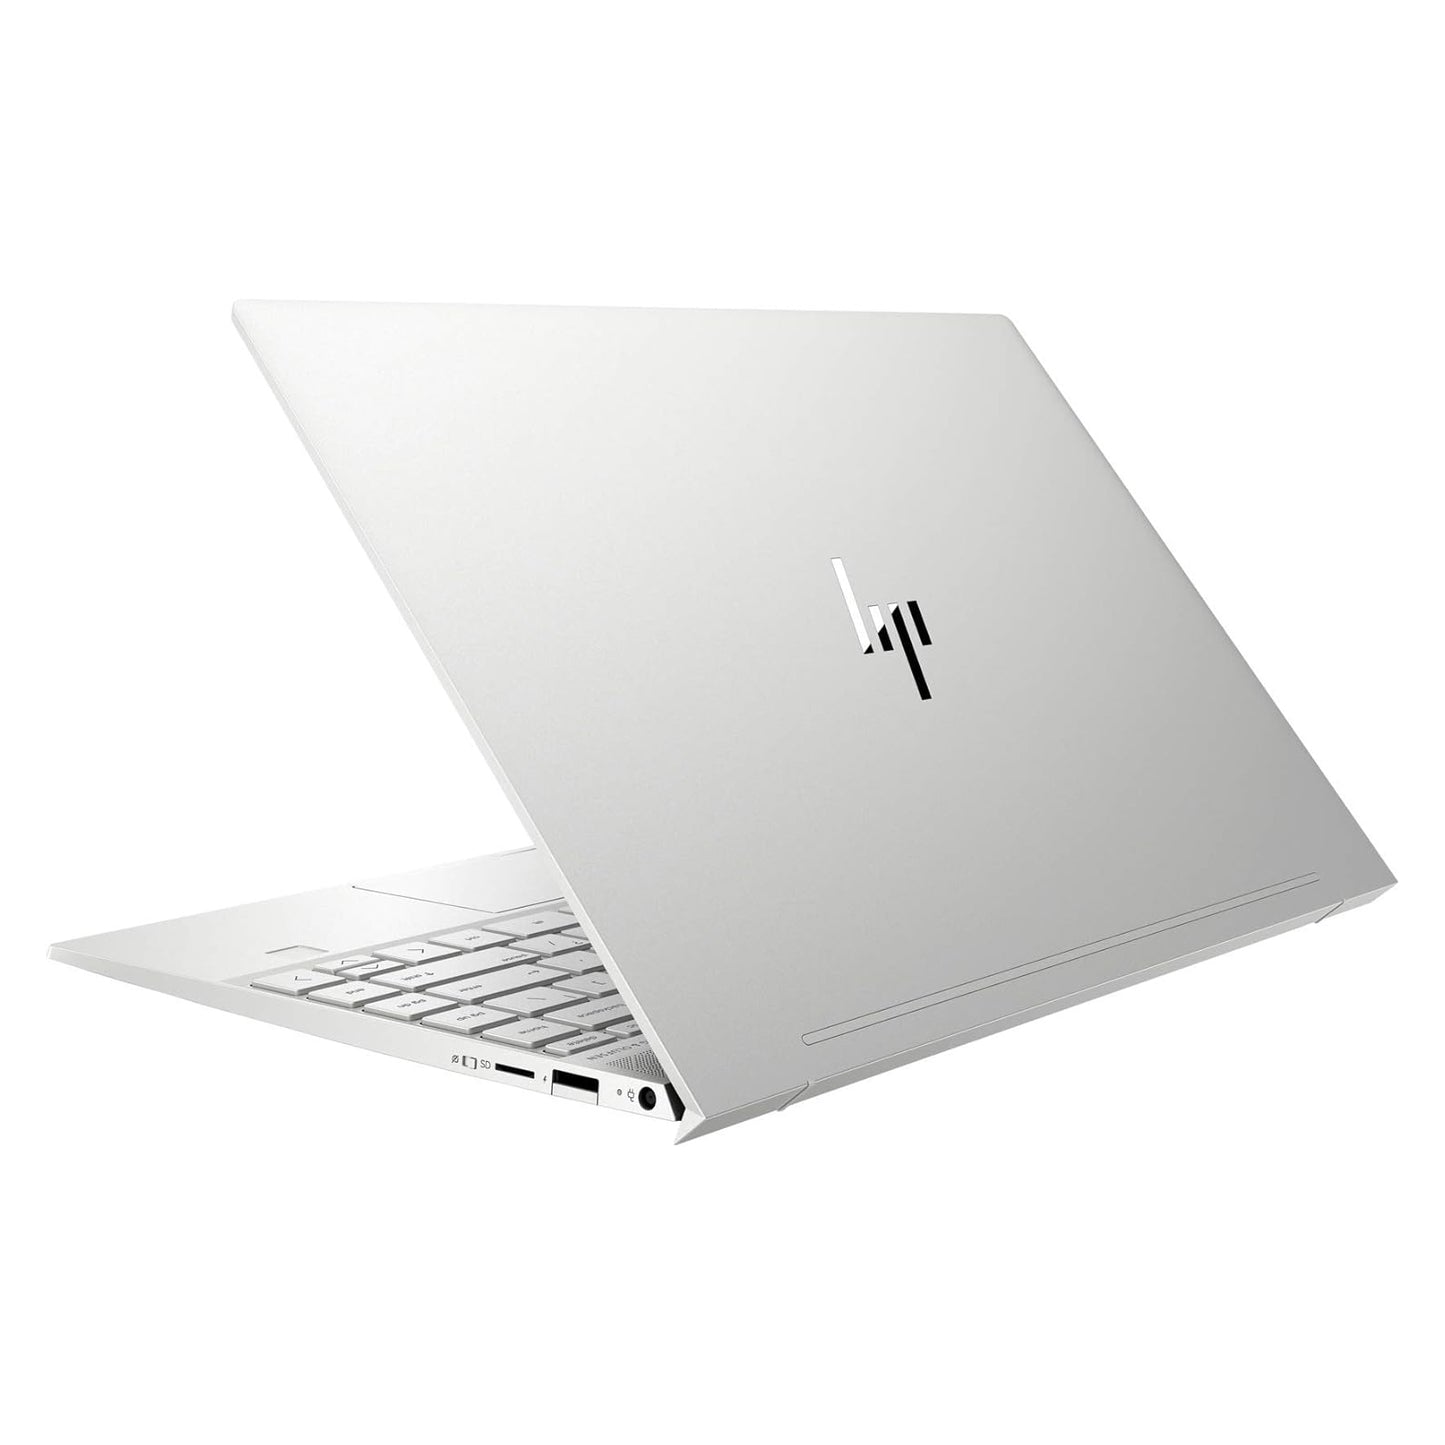 HP Envy 13-AQ1001CA Core i5-1035g1 120hz 13.3" Laptop Offer (New OB)